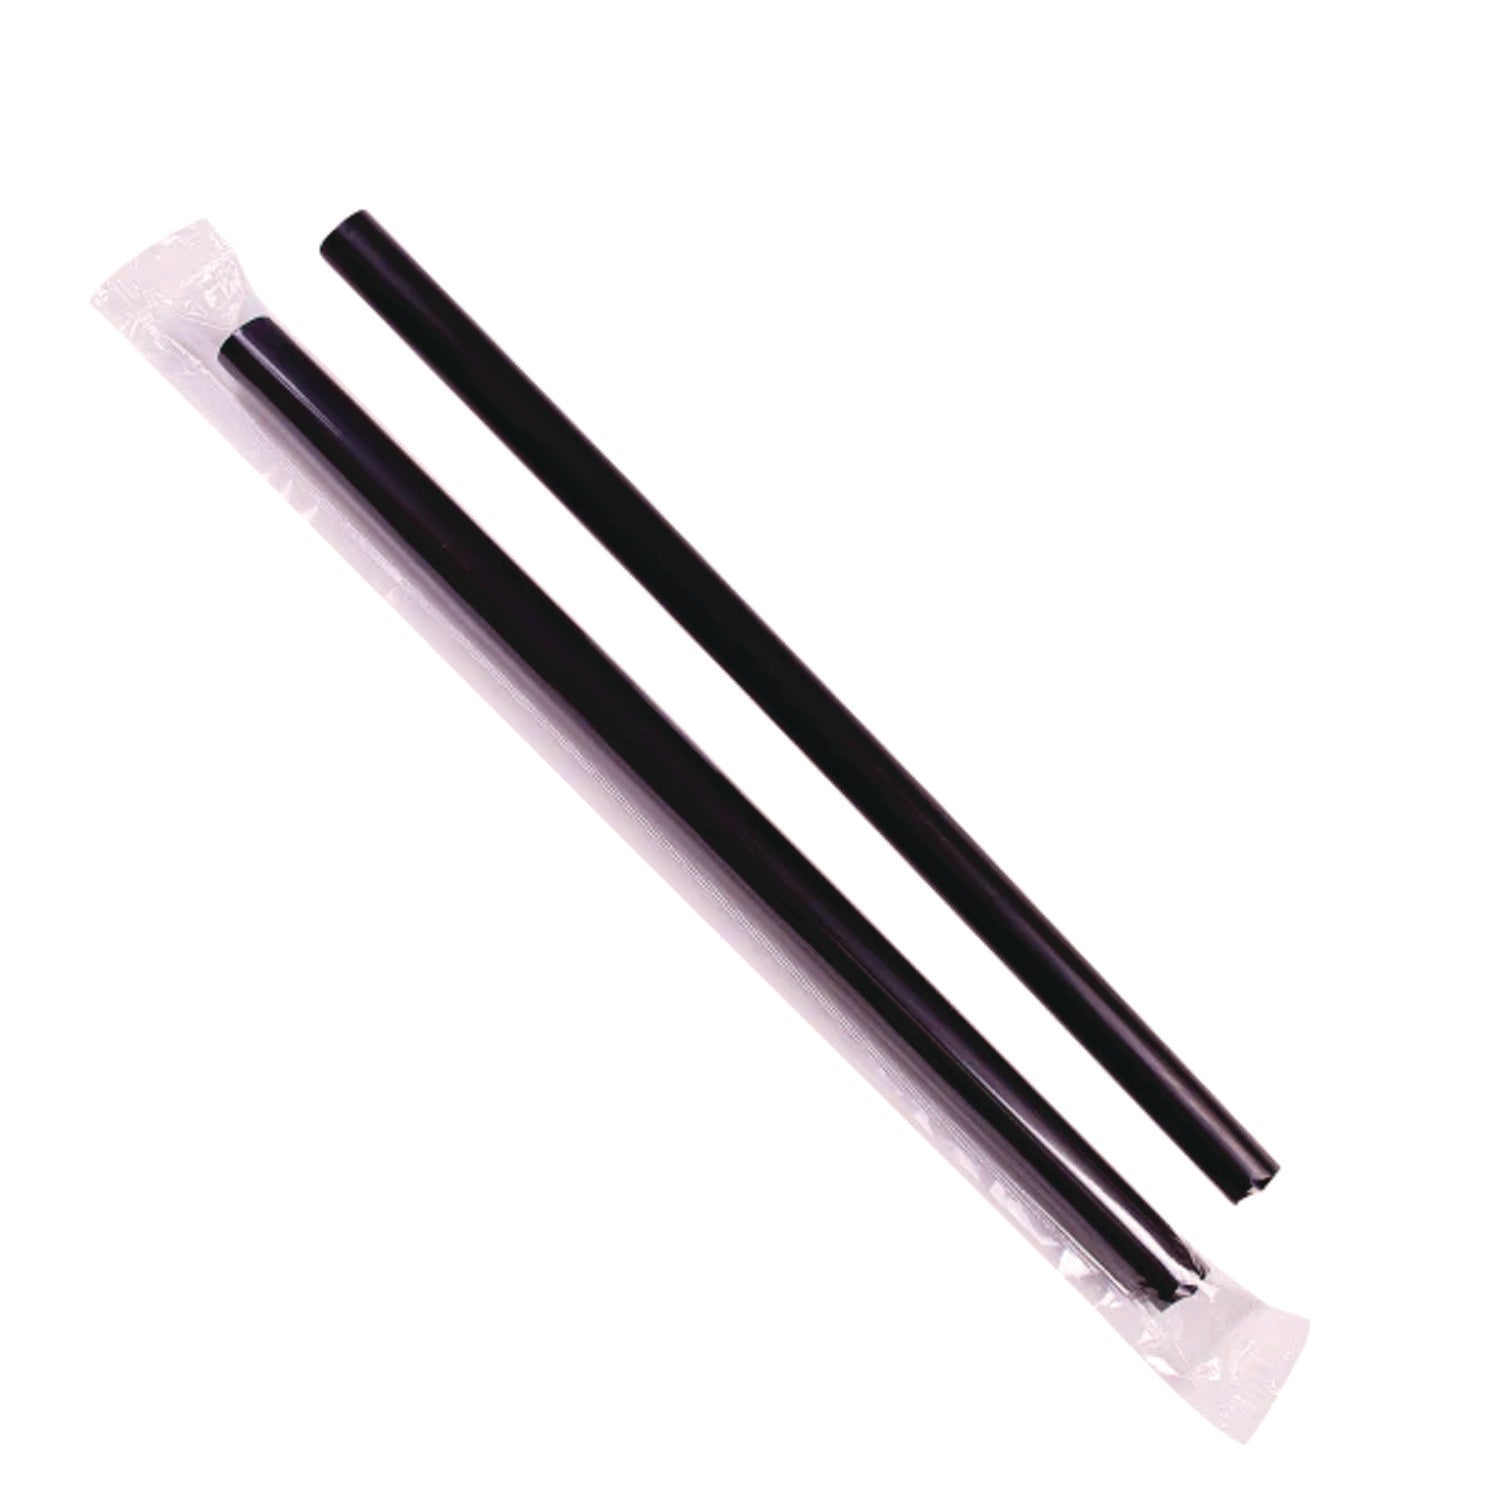 boba-straws-9-black-1600-carton_krtc9060sblack - 1